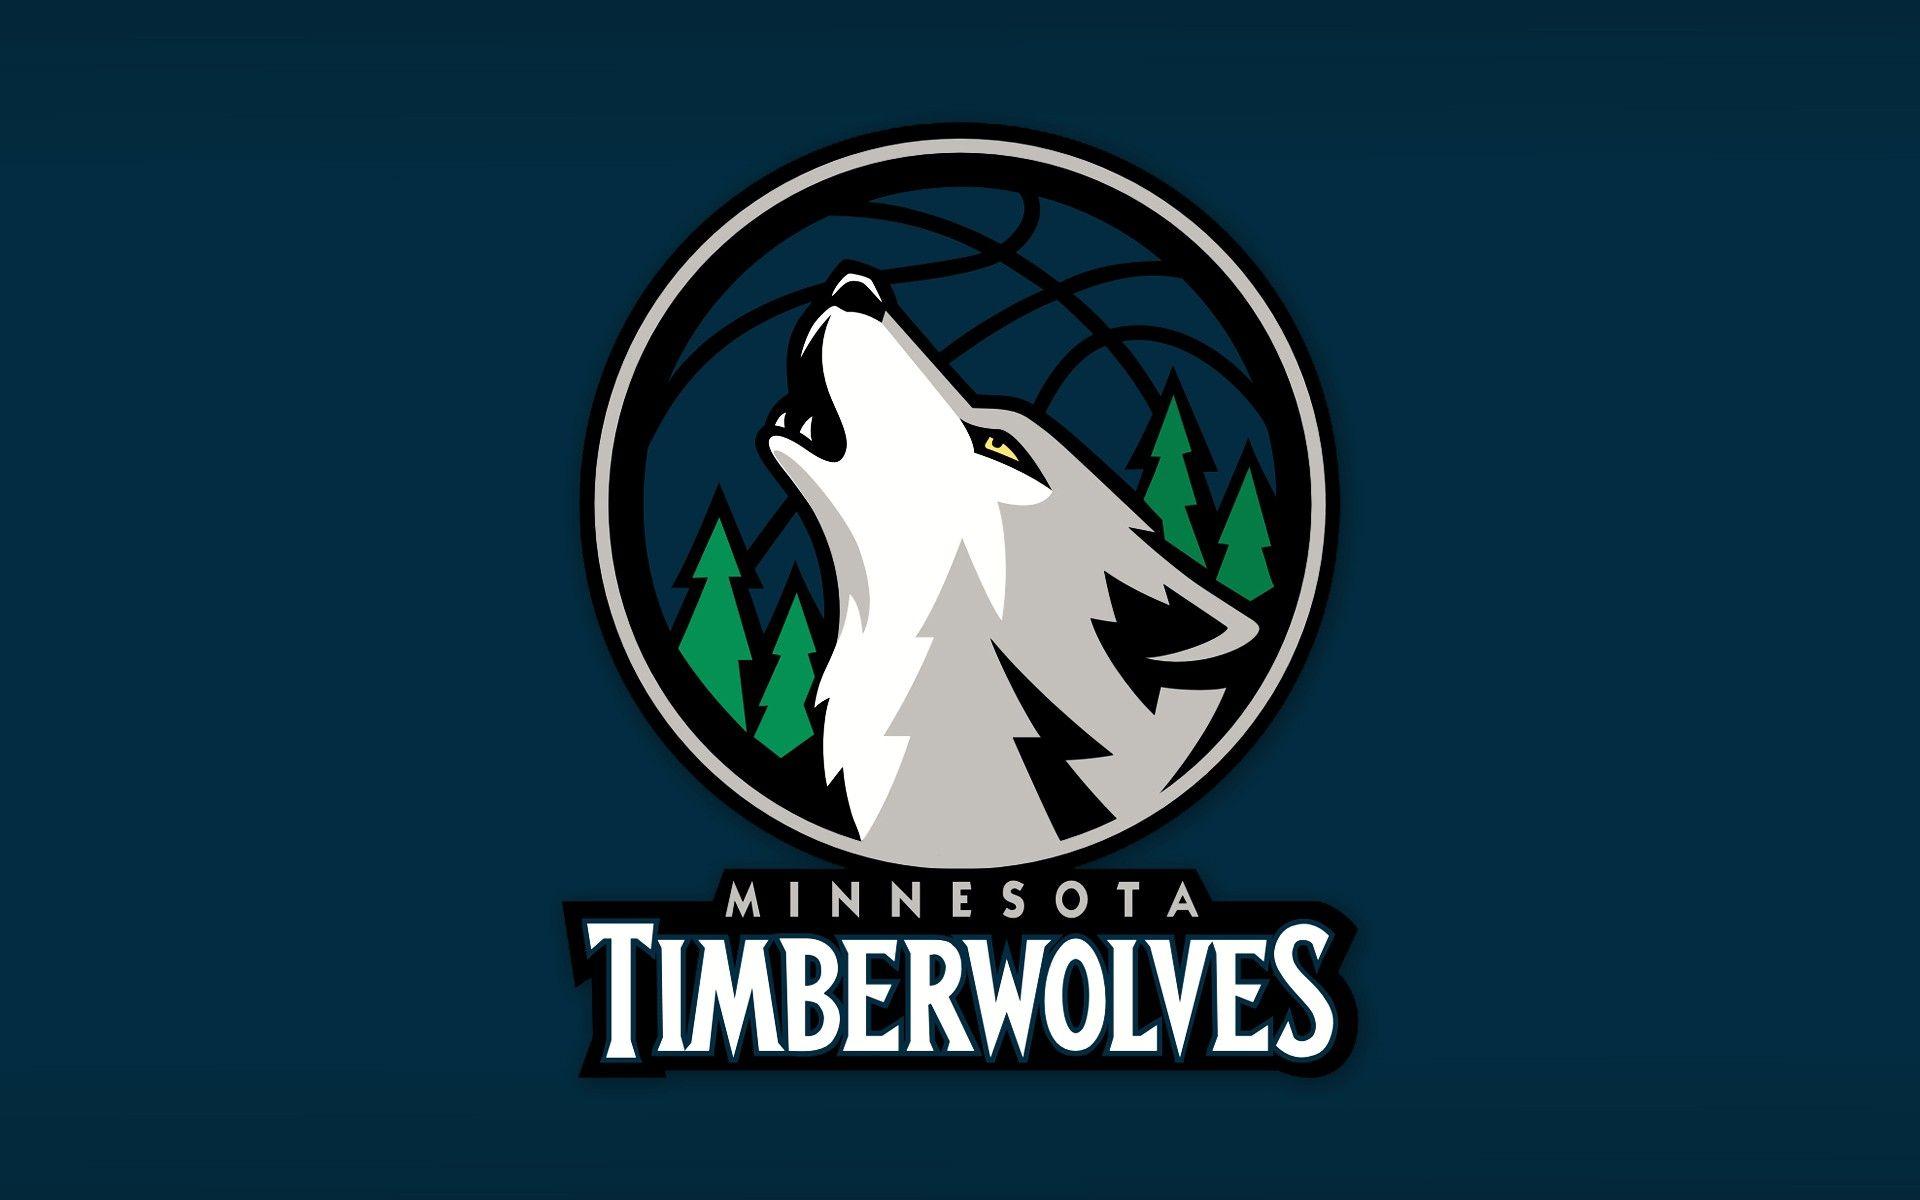 timberwolves wallpaper for ipad